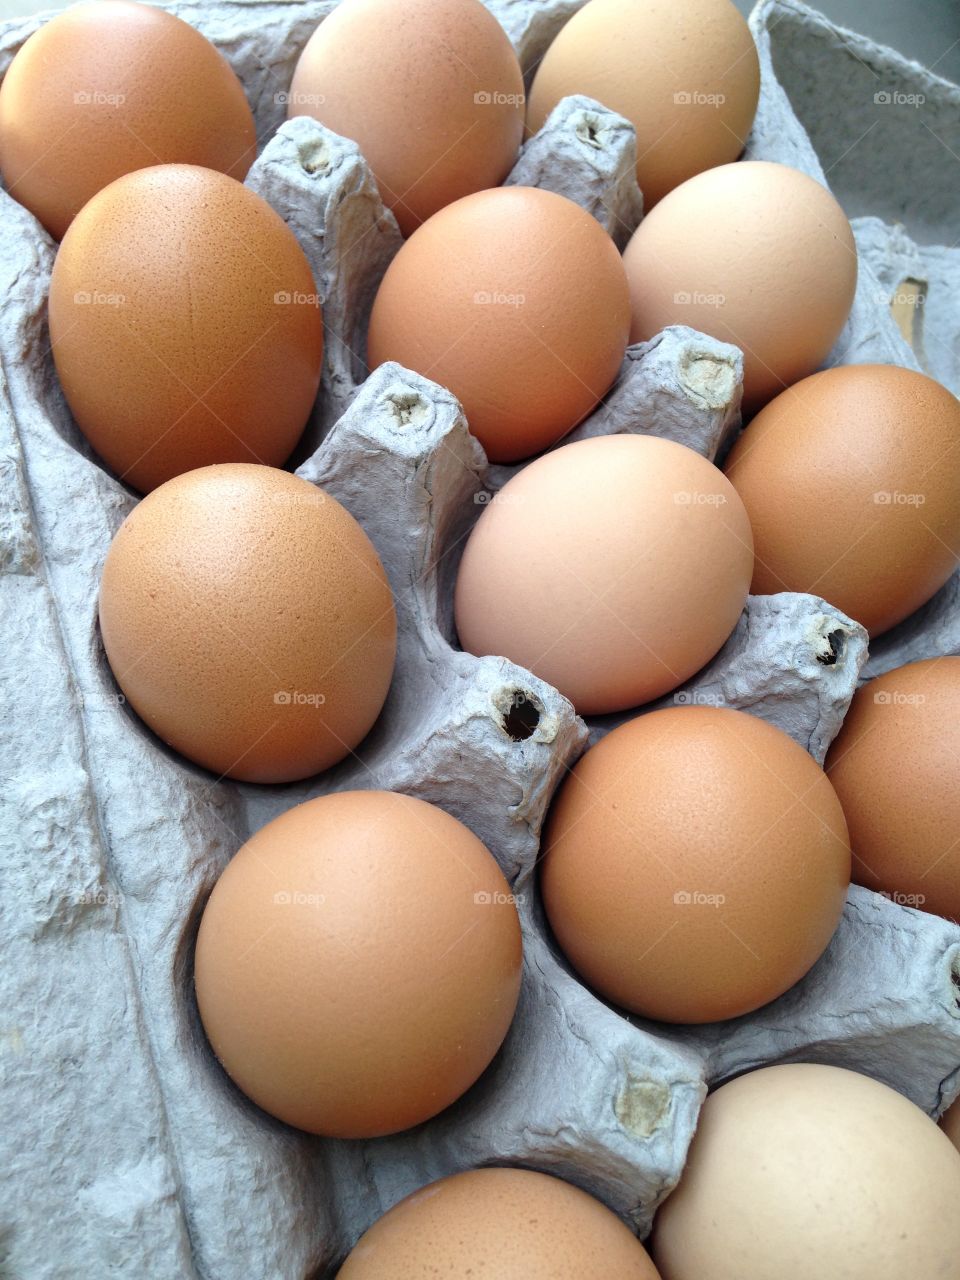 Farm eggs. We raise a small flock or free range chicken for eggs. 